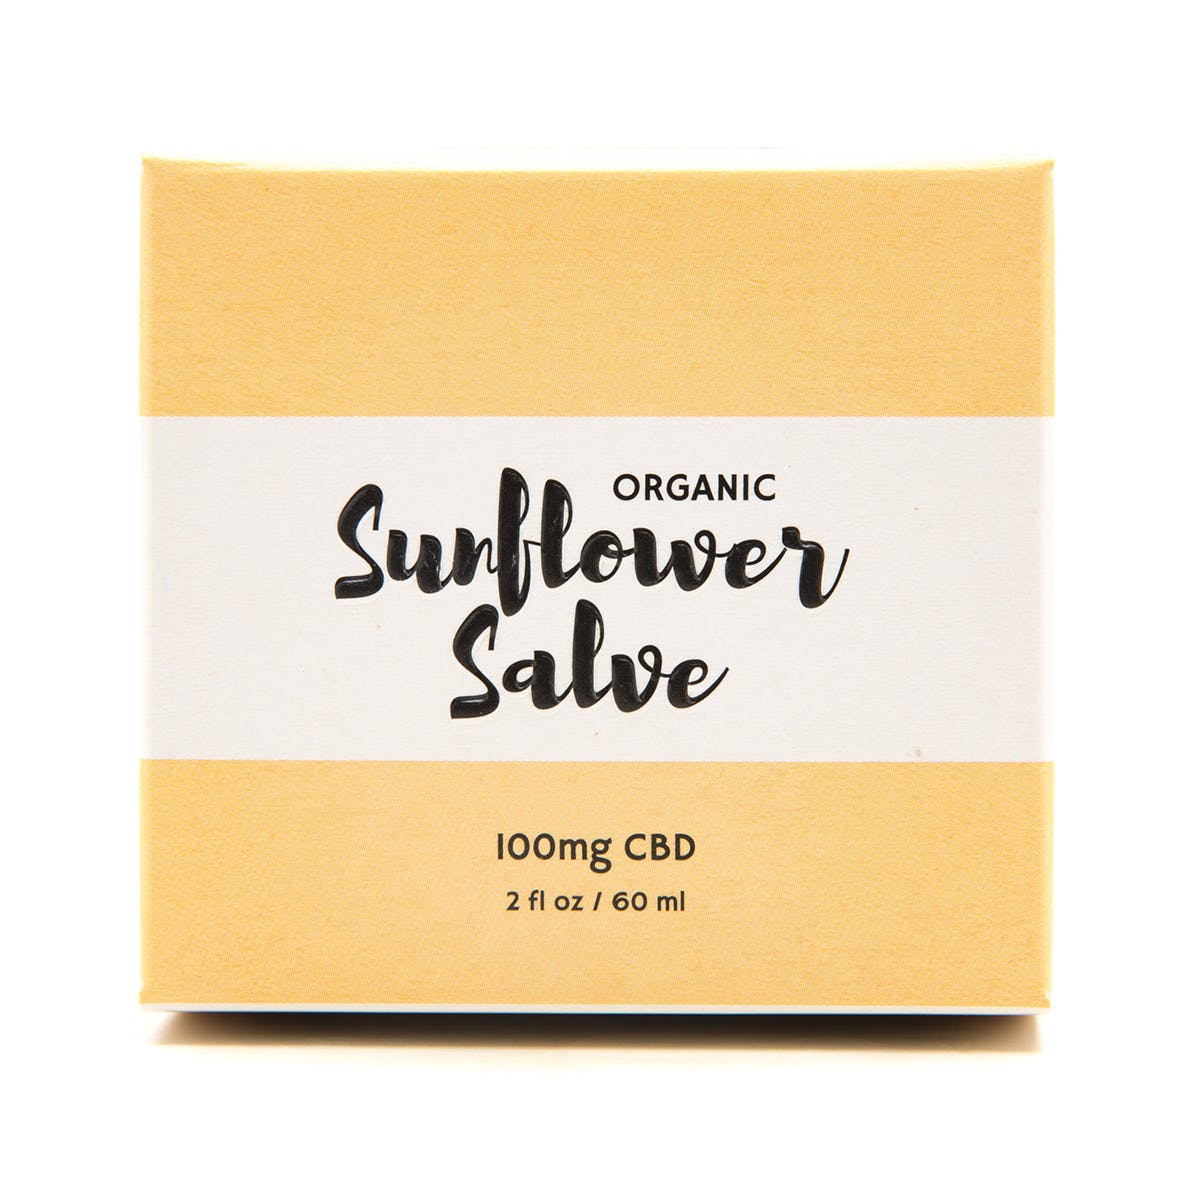 Organic Sunflower Salve 100mg CBD